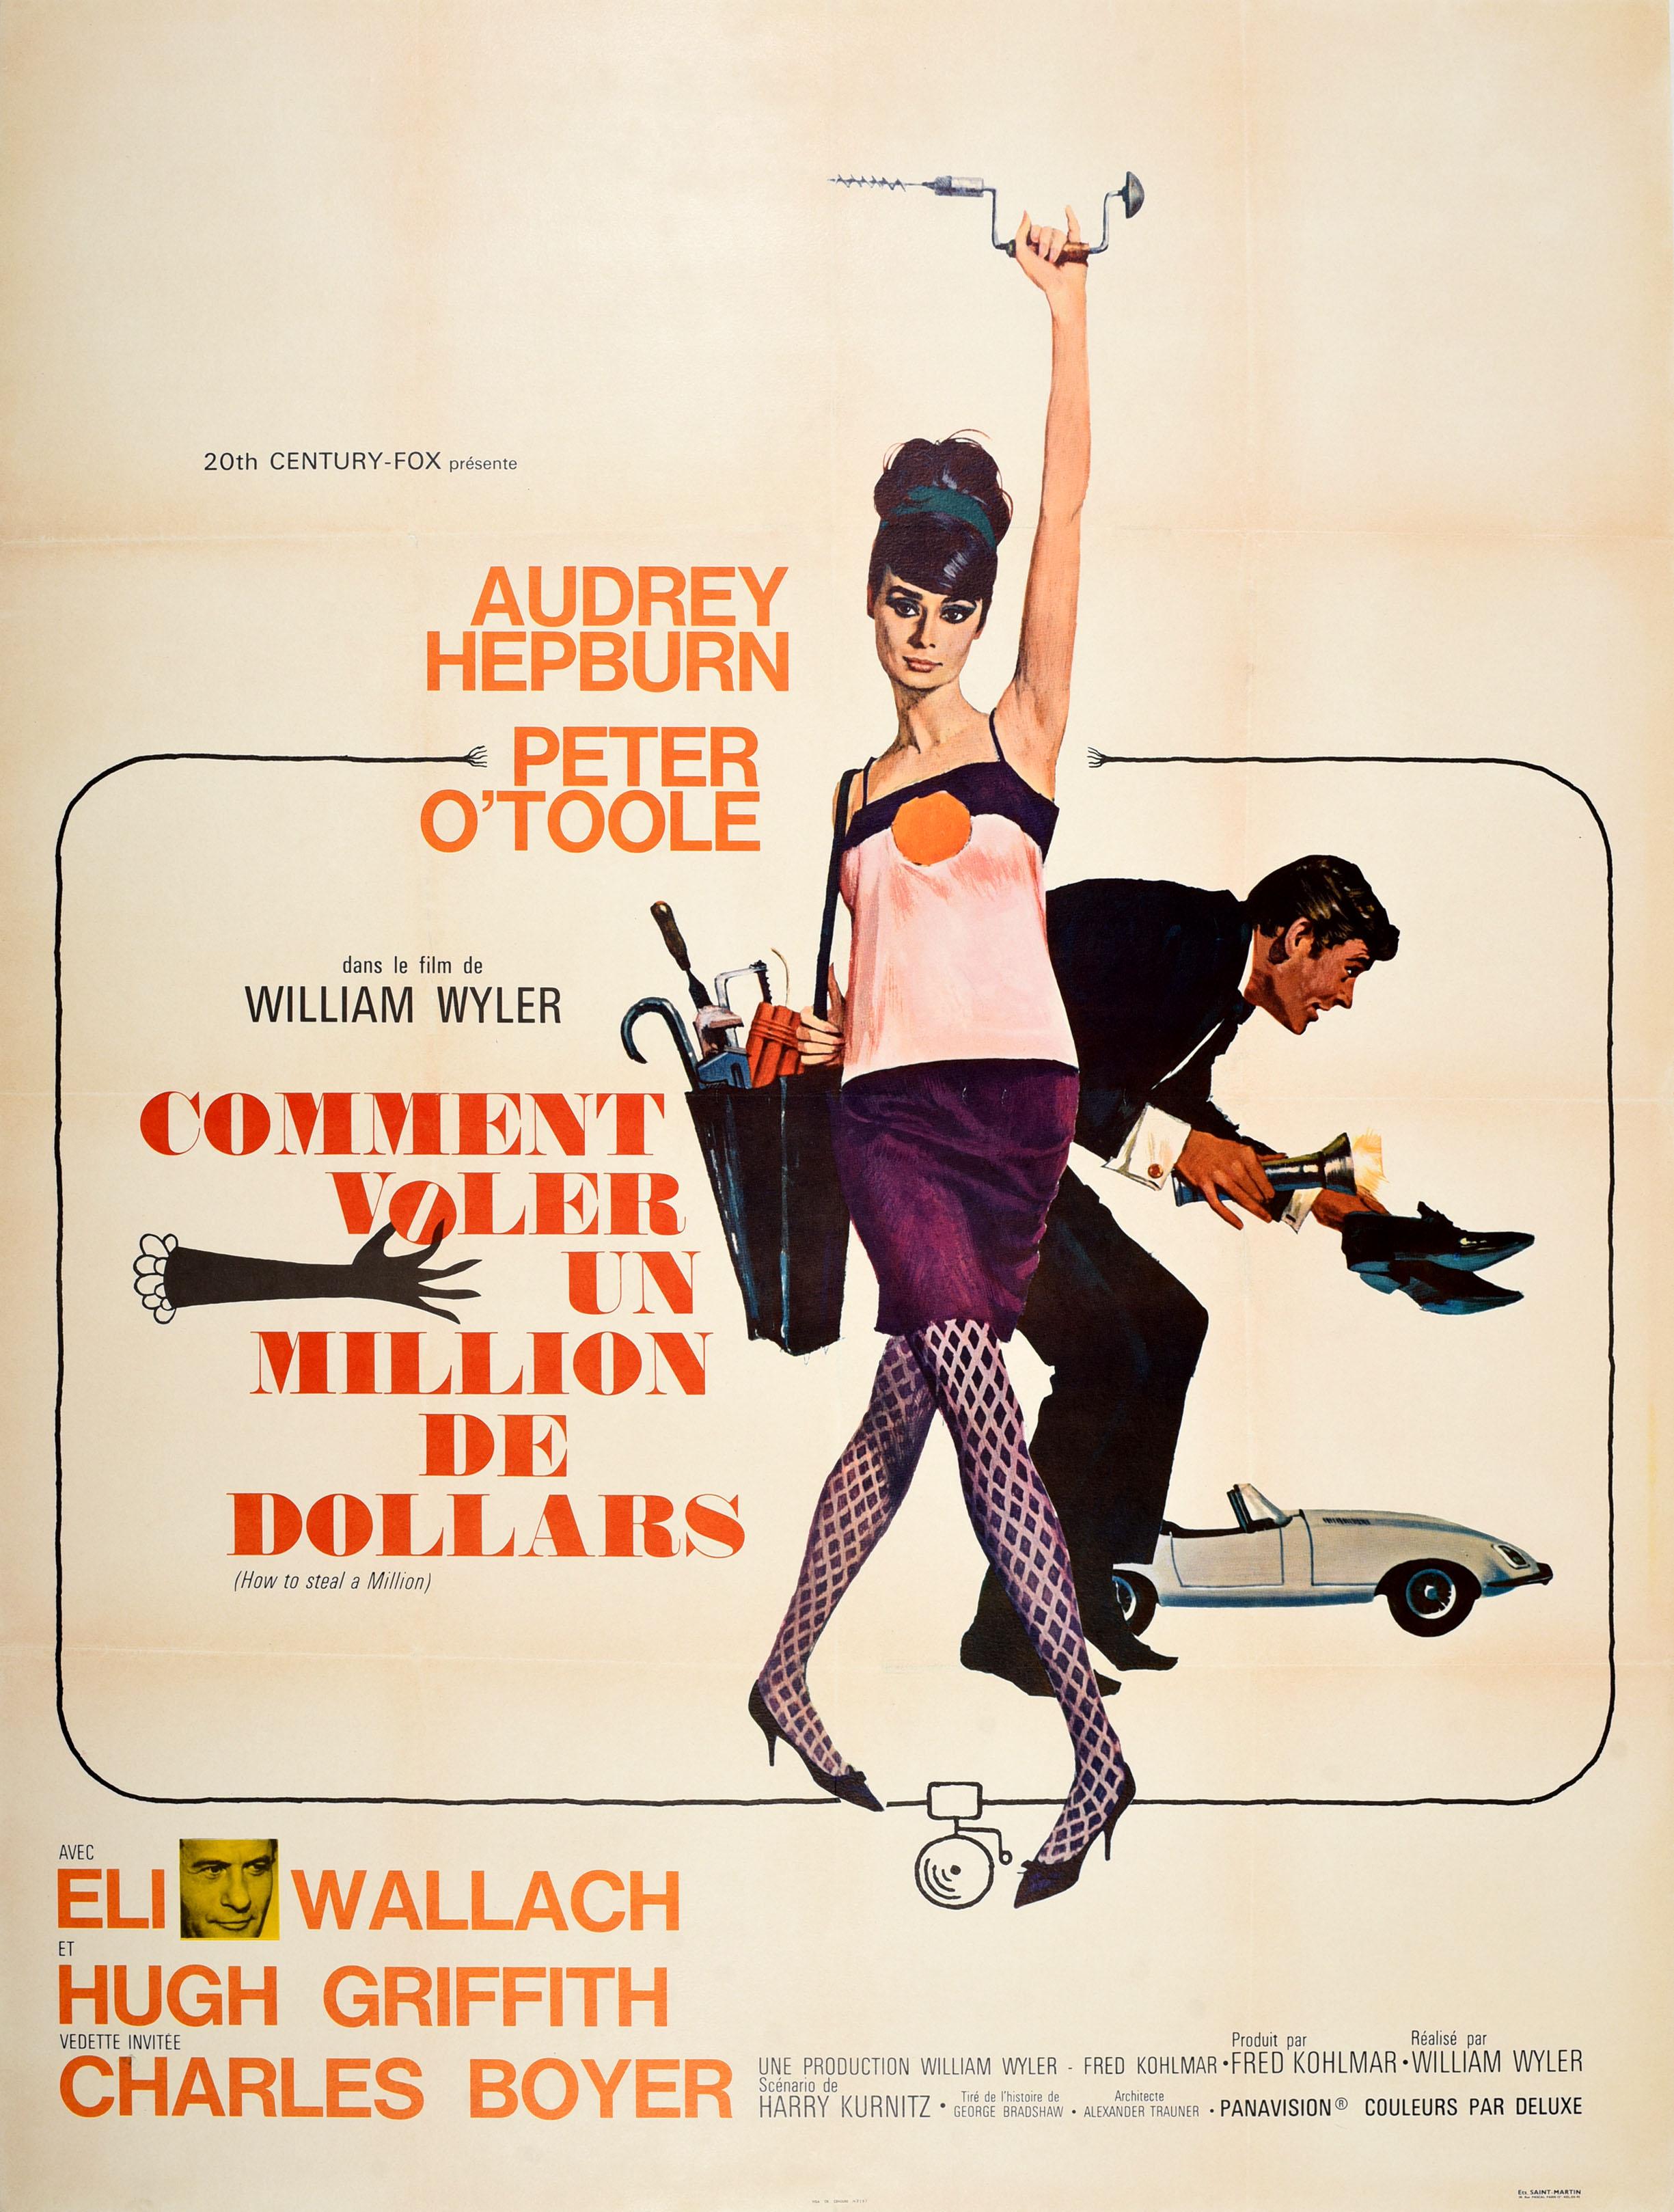 Robert E. McGinnis Print - Original Vintage Film Poster How To Steal A Million Audrey Hepburn OToole France